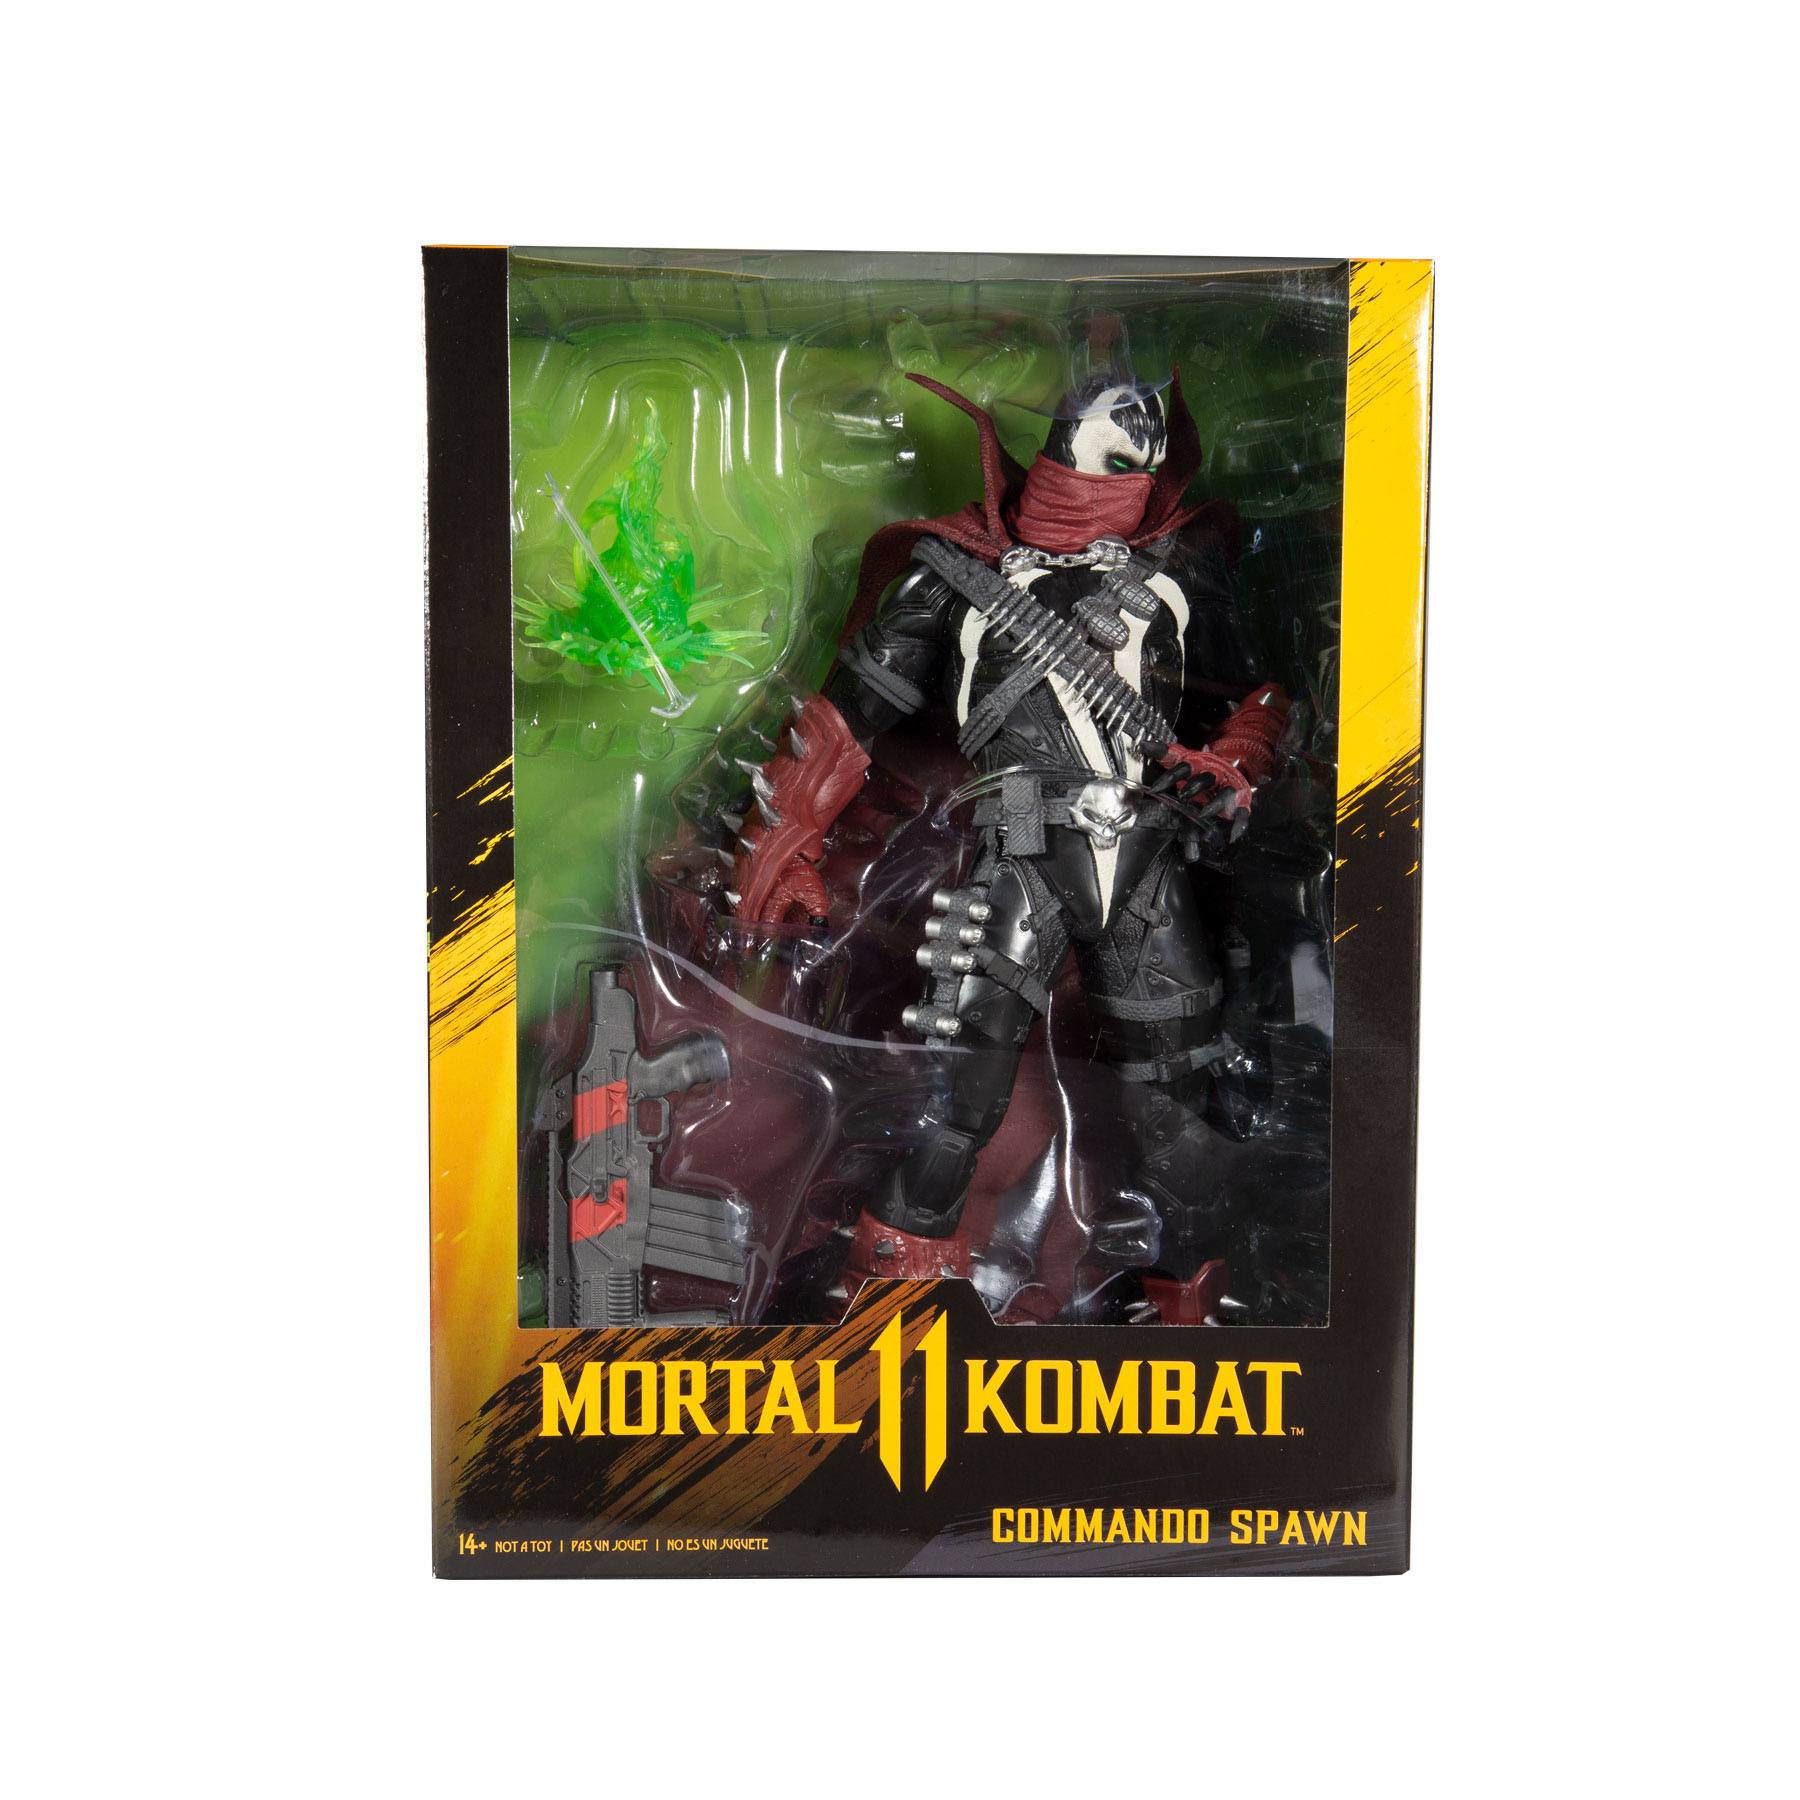 Mortal Kombat Actionfigur Commando Spawn - Dark Ages Skin 30 cm MCF11052-4 787926110524